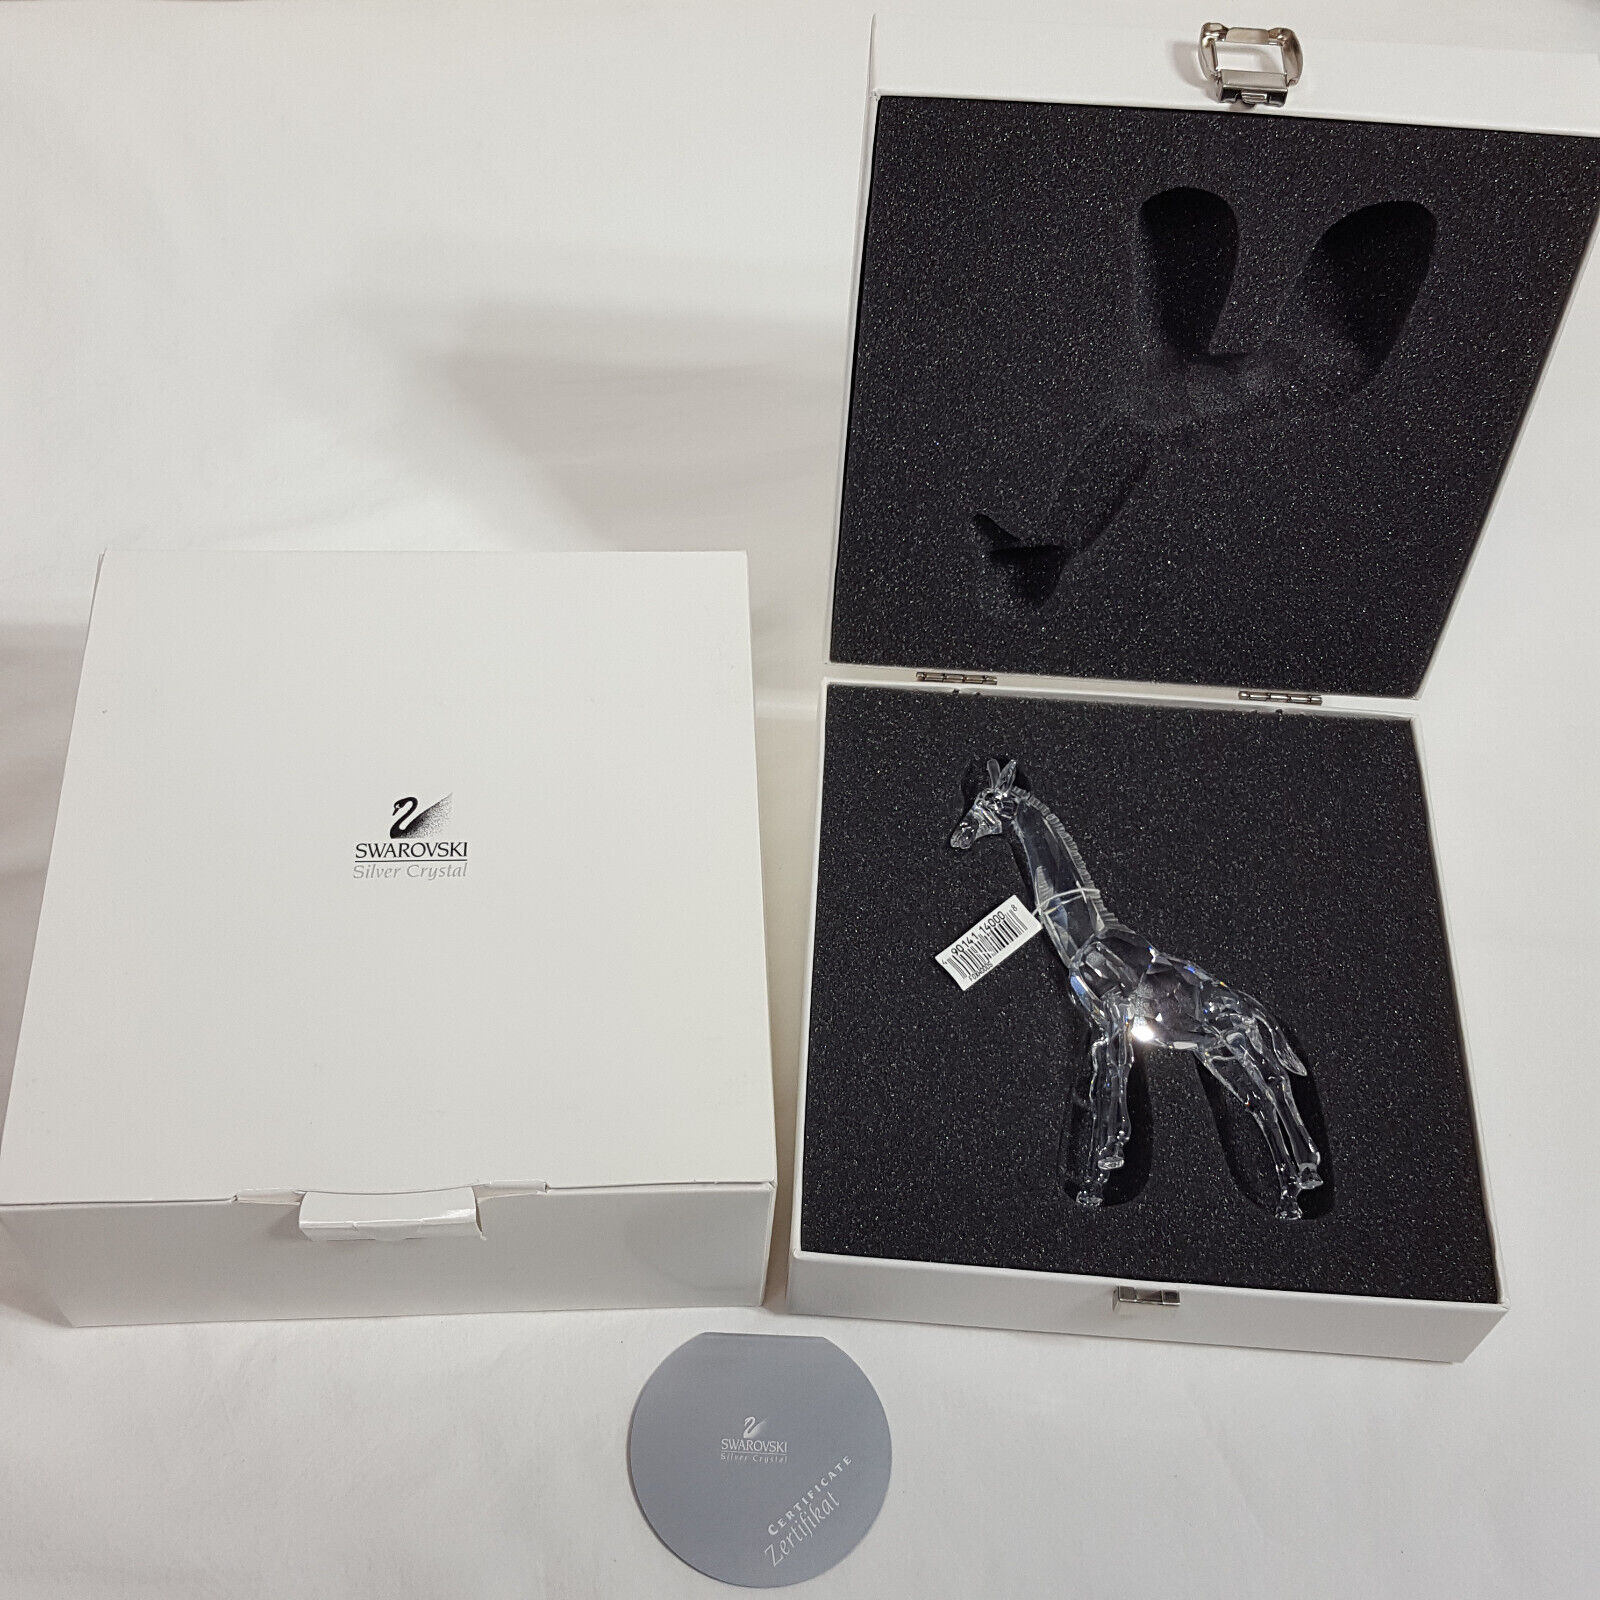 Swarovski Silver Crystal Baby Giraffe Figurine with Box and Certificate 7603